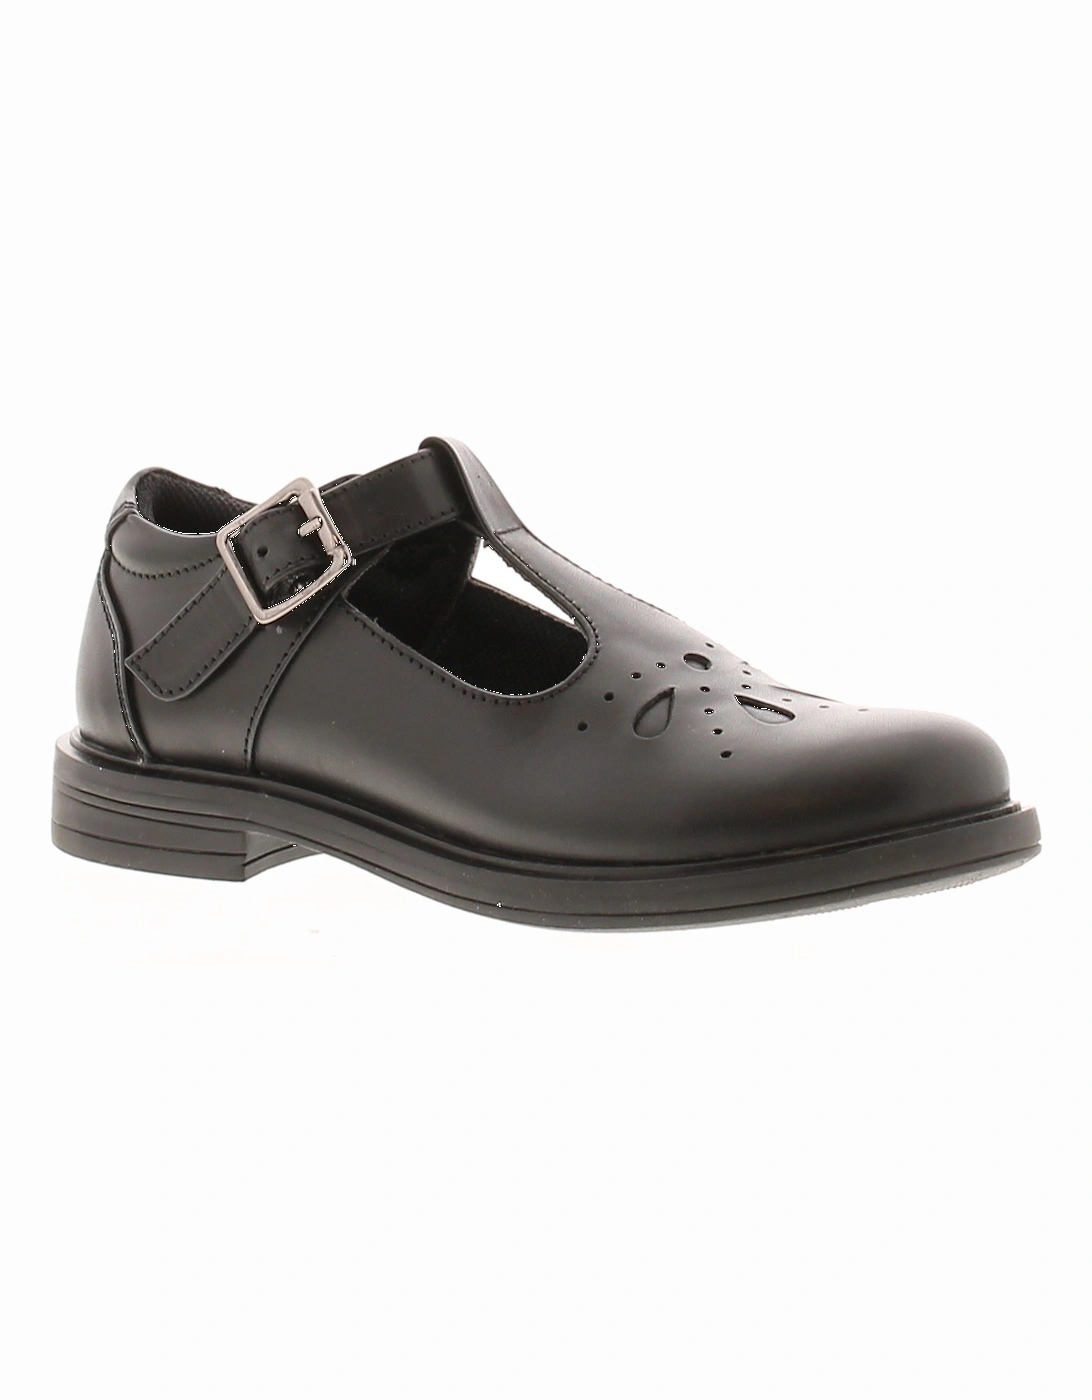 Girls Shoes School Choppy Leather Buckle black UK Size, 6 of 5